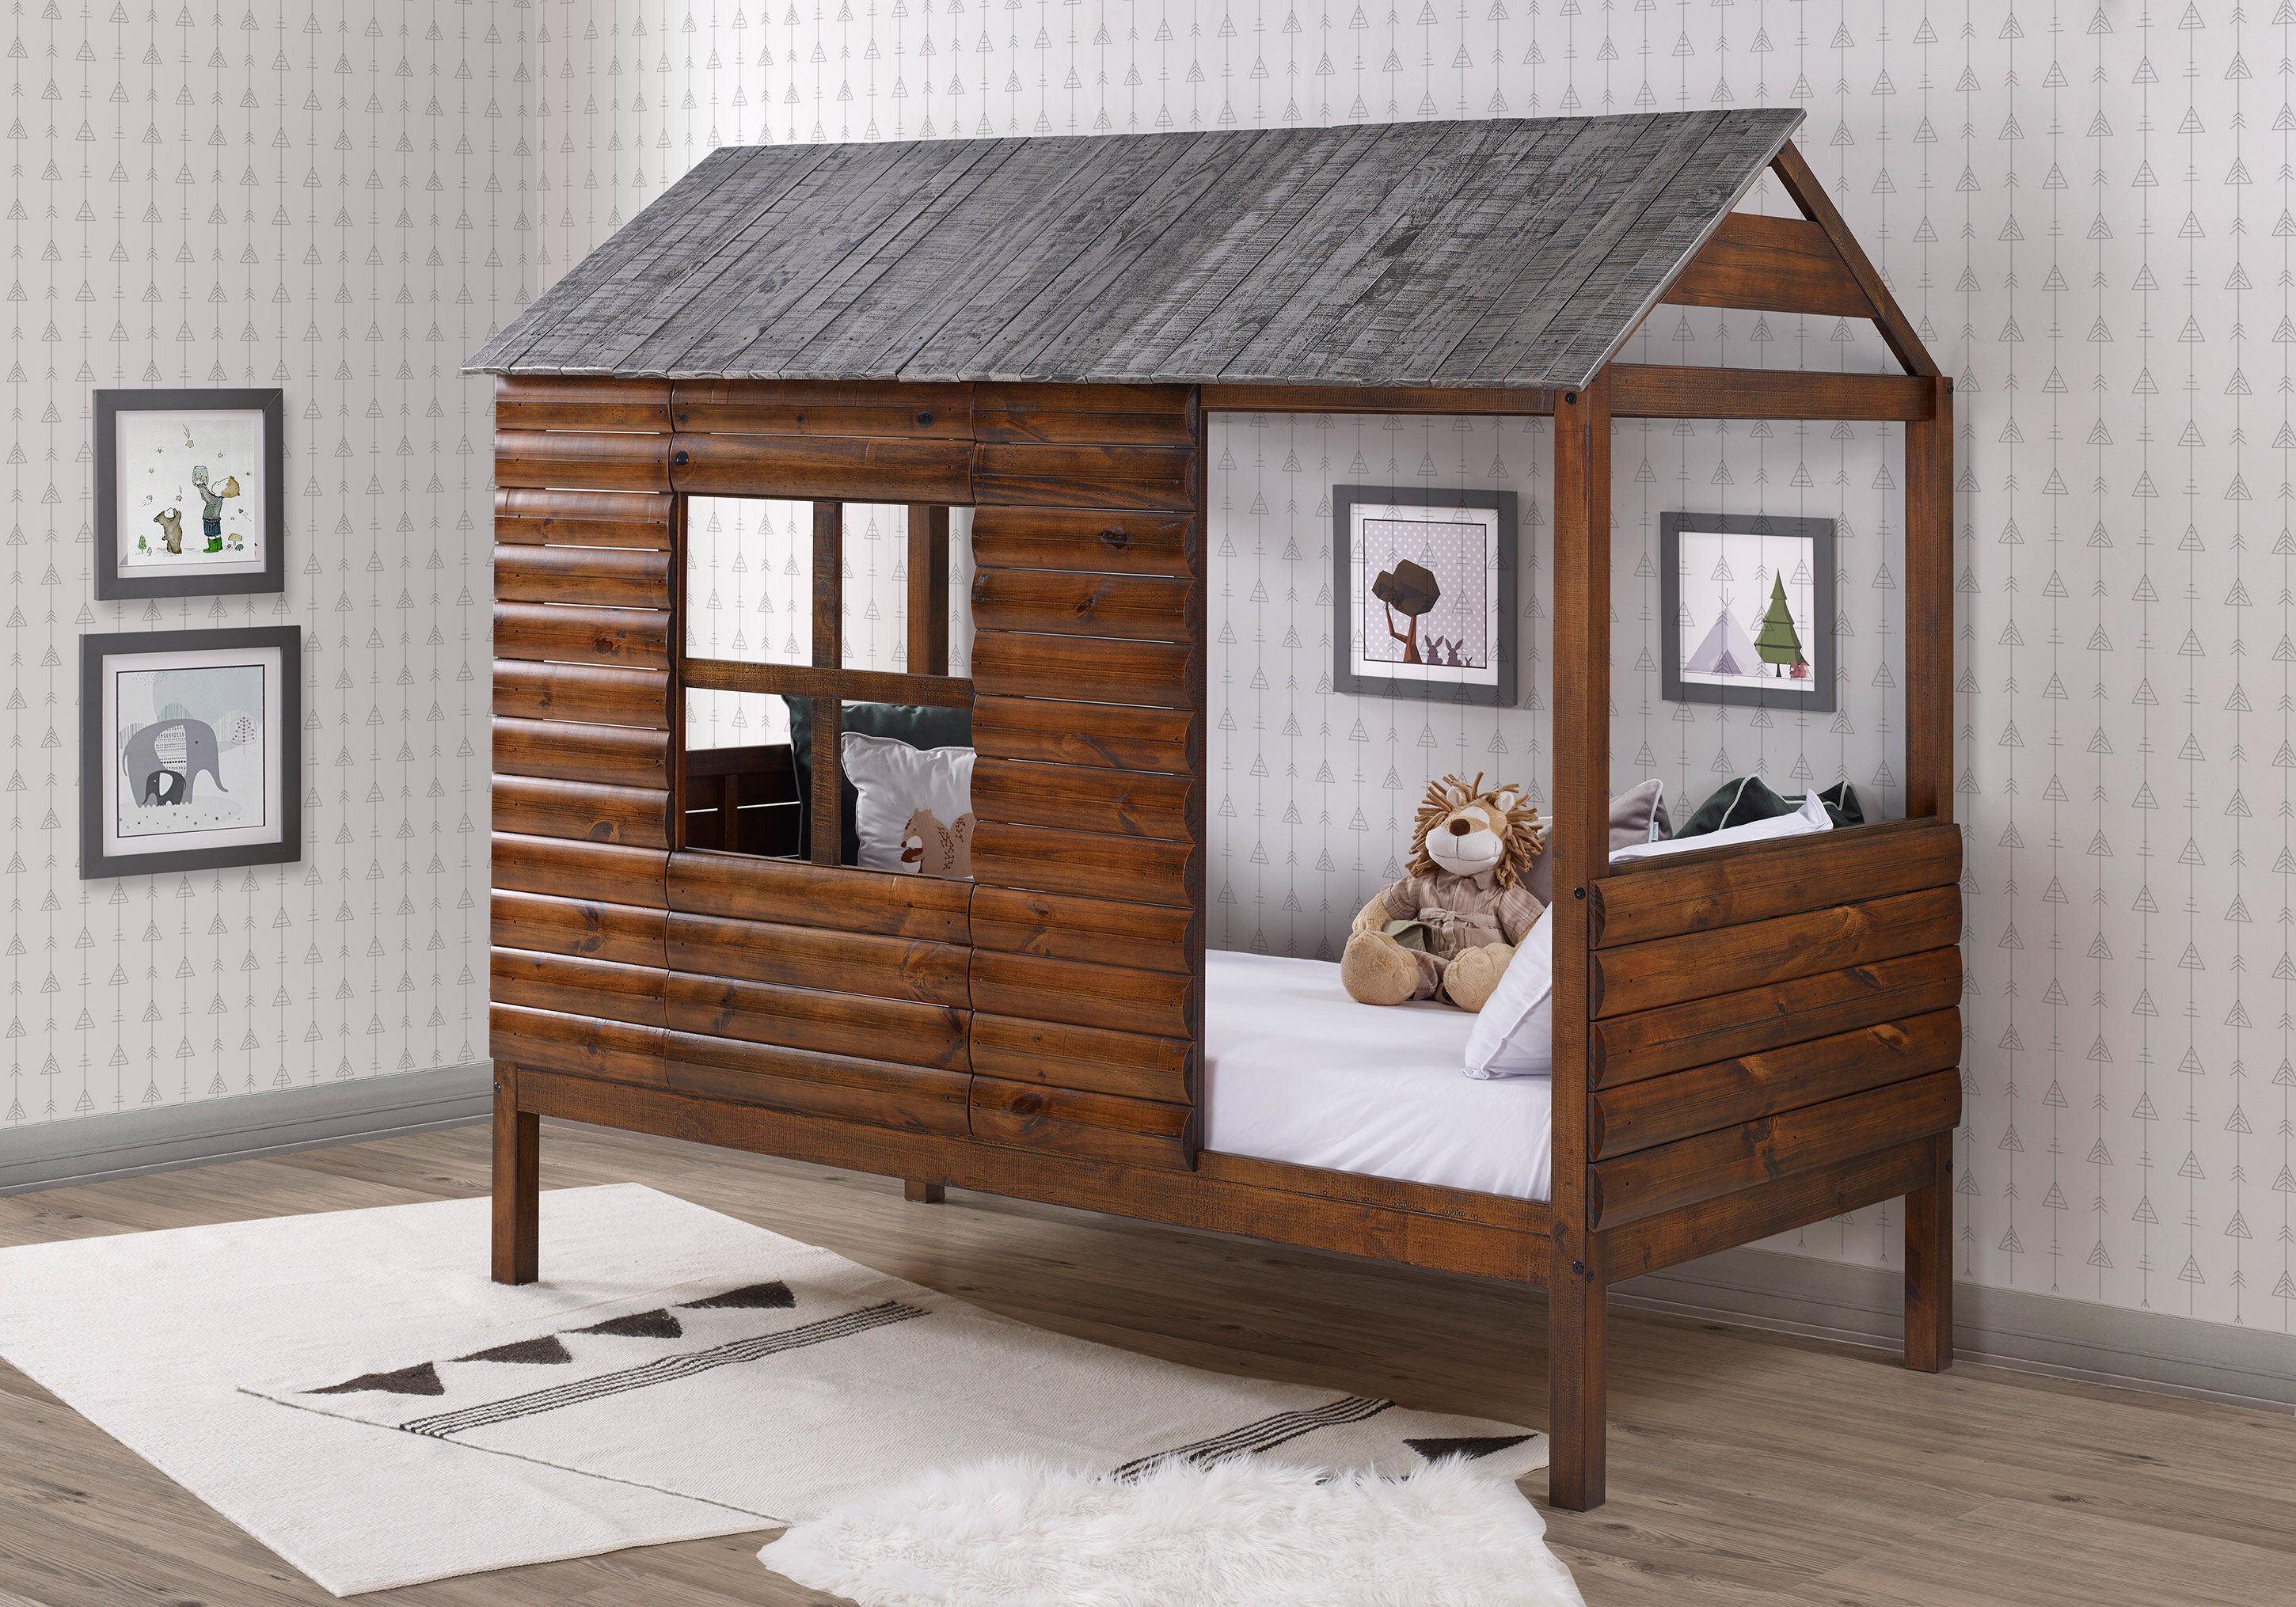 Full Rustic Log Bed Free Shipping Log Bedroom Furniture Rustic Cabin Decor Home Garden Enoxmedia Beds Bed Frames